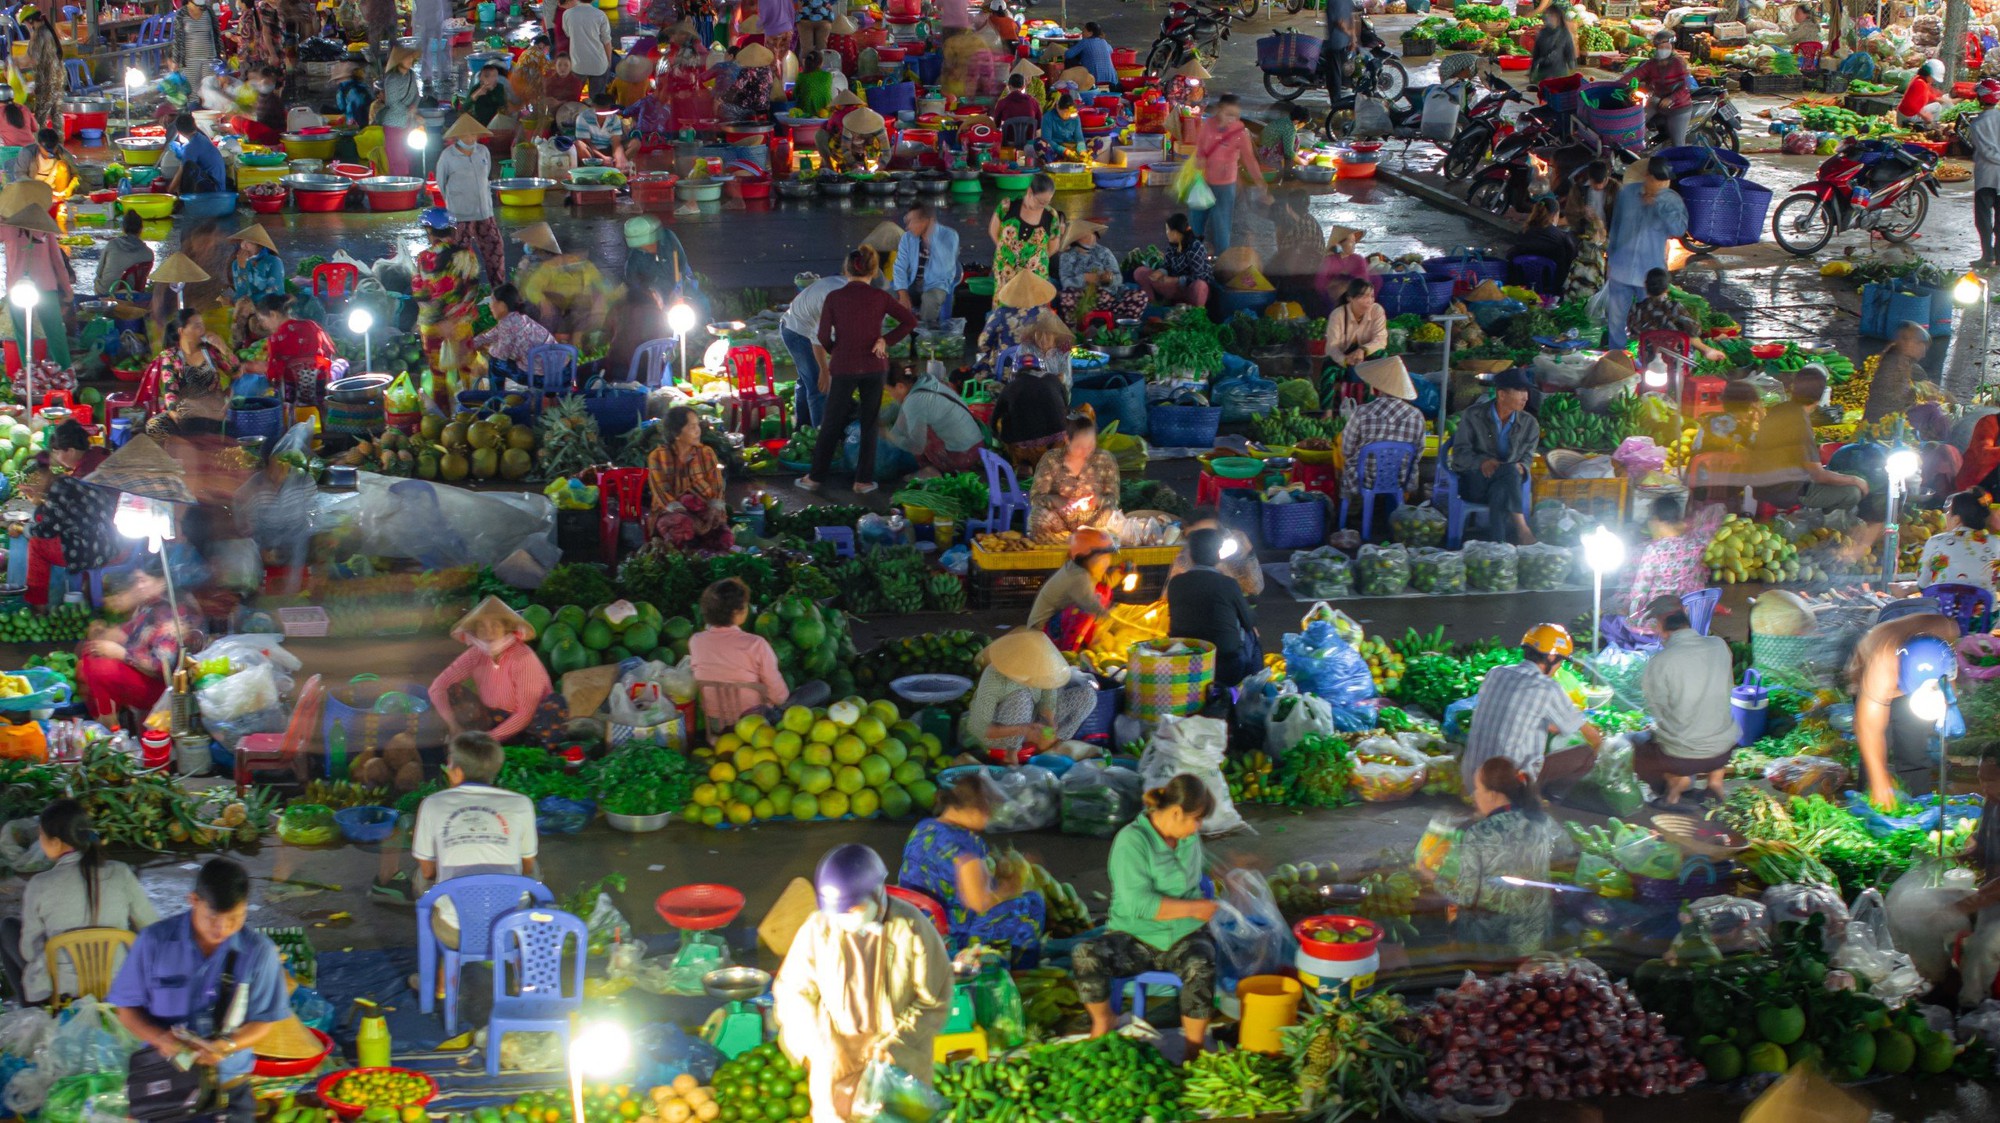 Unique scene of the 'unique' market in the West - Photo 5.